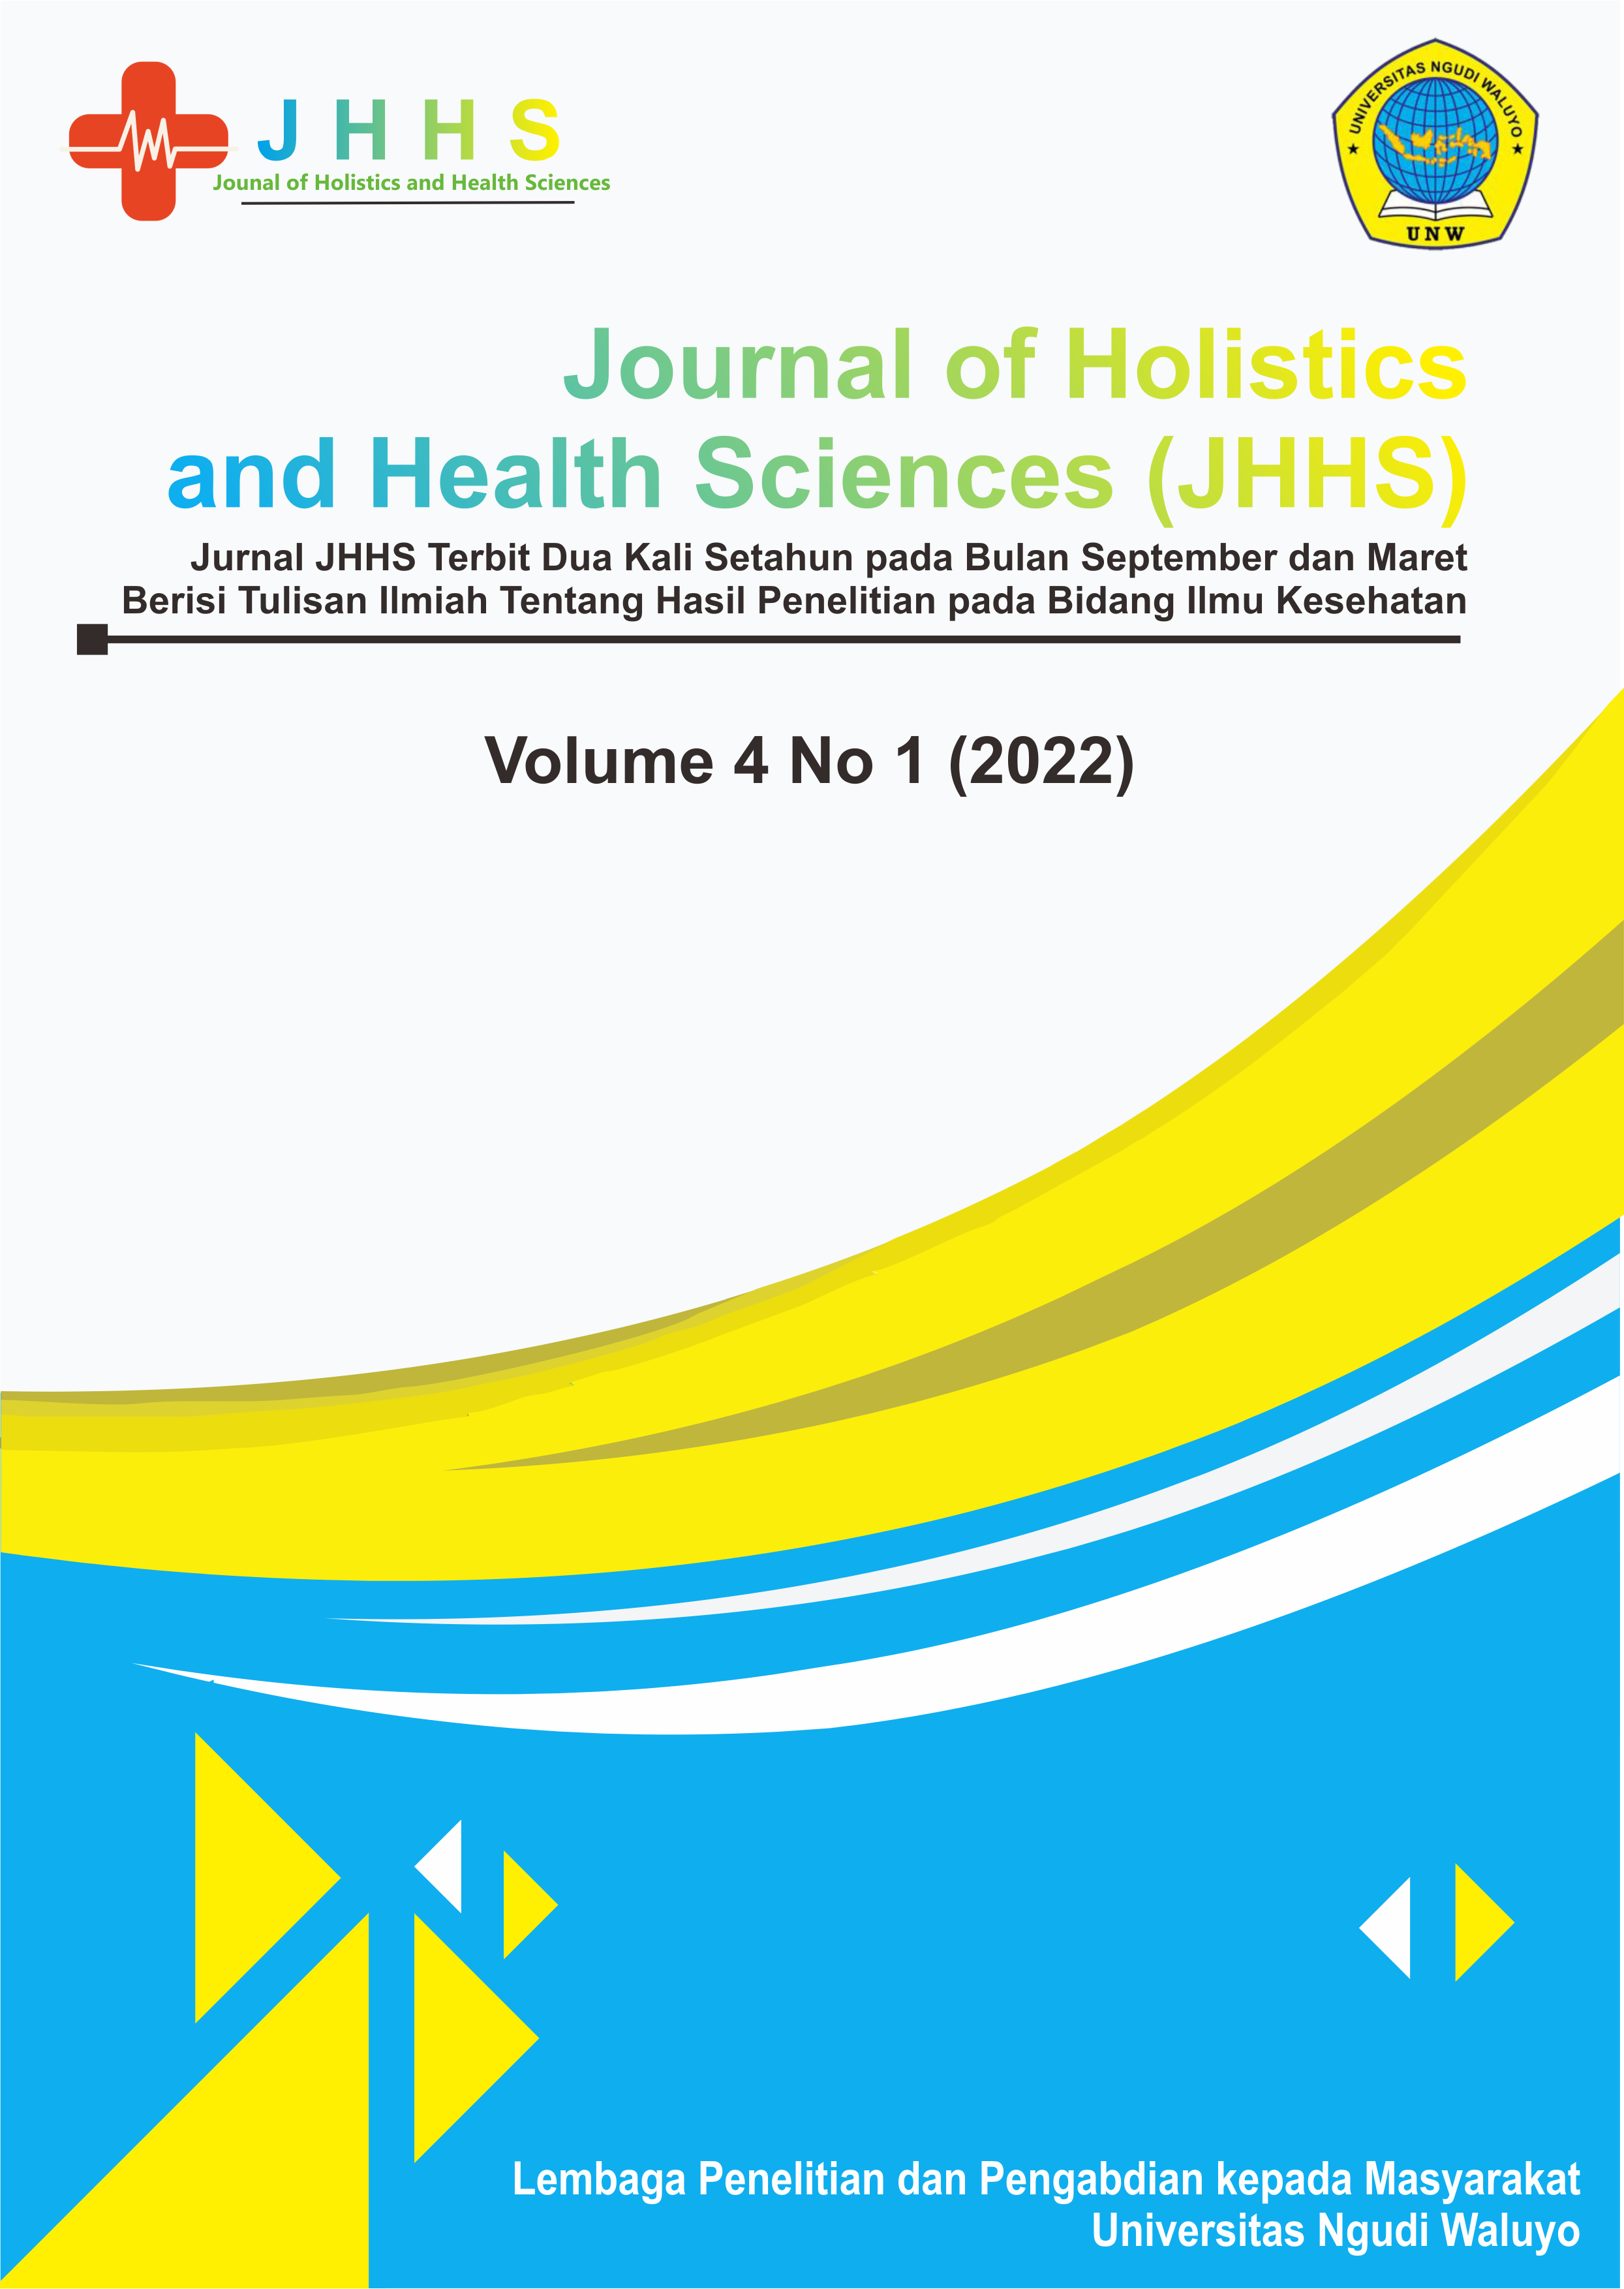 					View Vol. 4 No. 1 (2022): Journal of Holistics and Health Sciences (JHHS), Maret
				